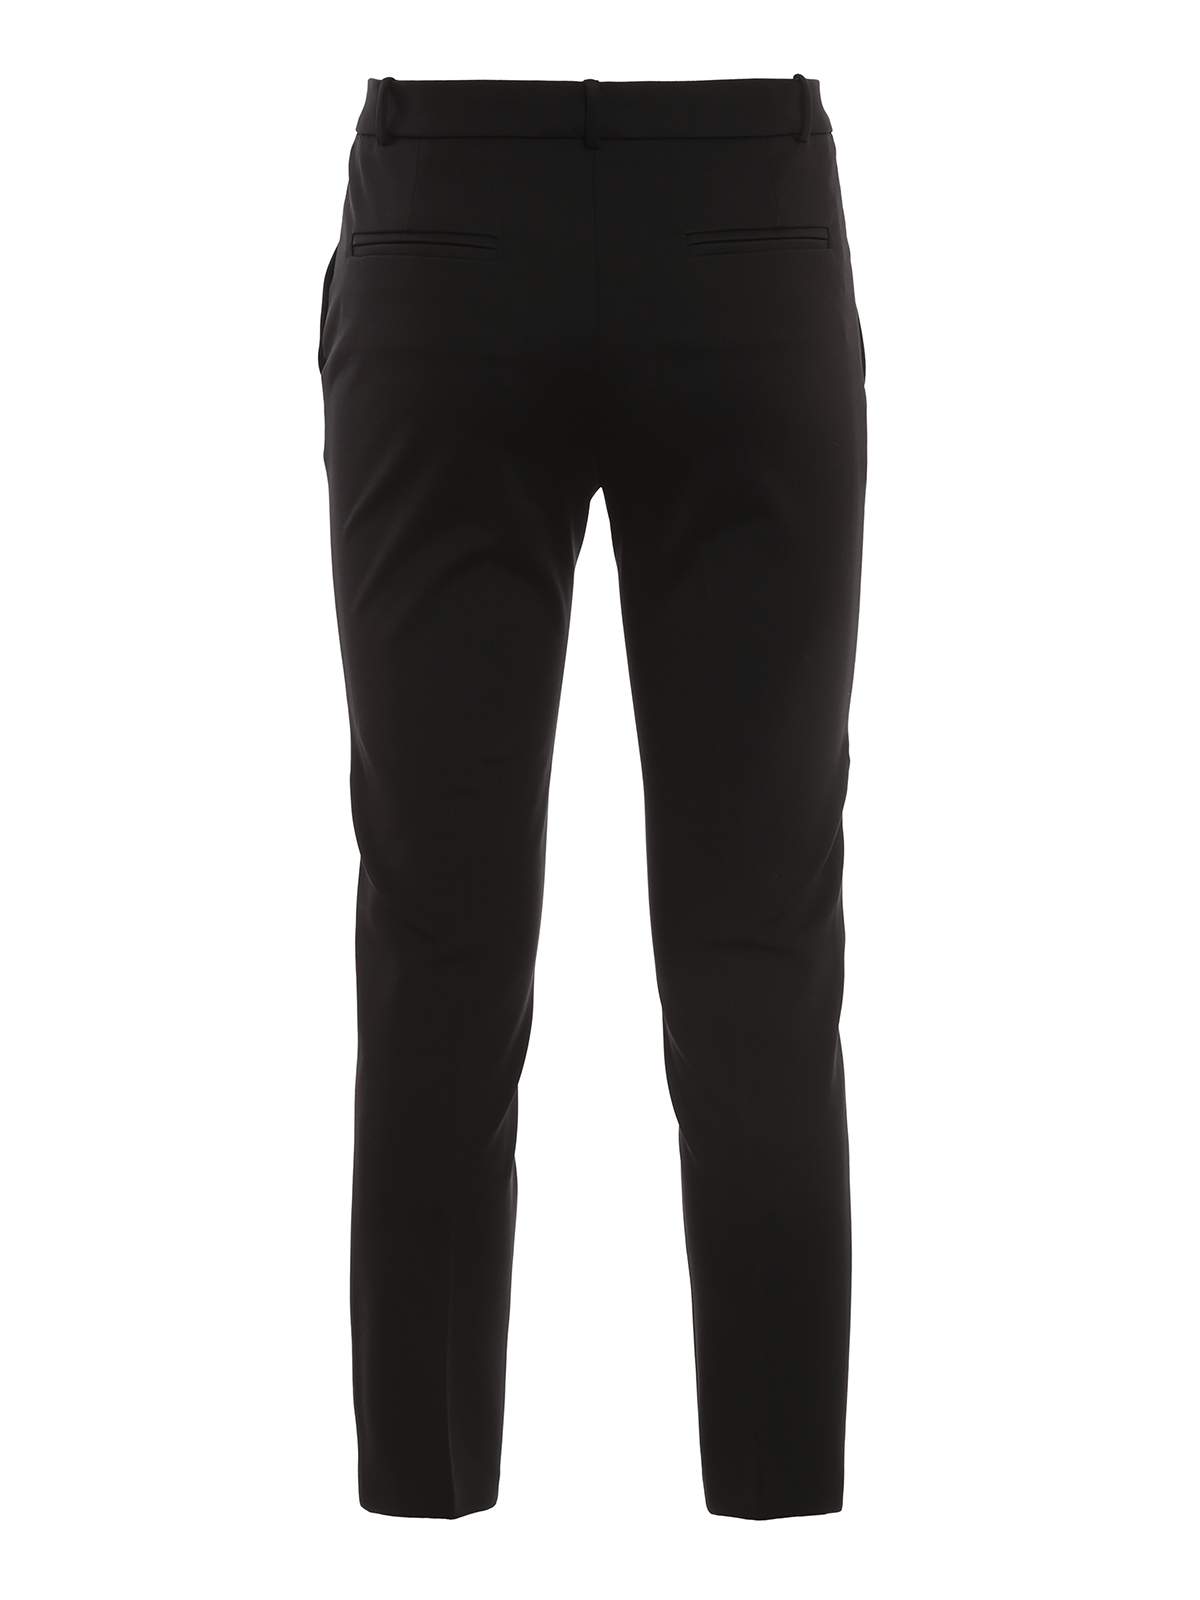 Buy Grey Trousers & Pants for Men by ARROW Online | Ajio.com